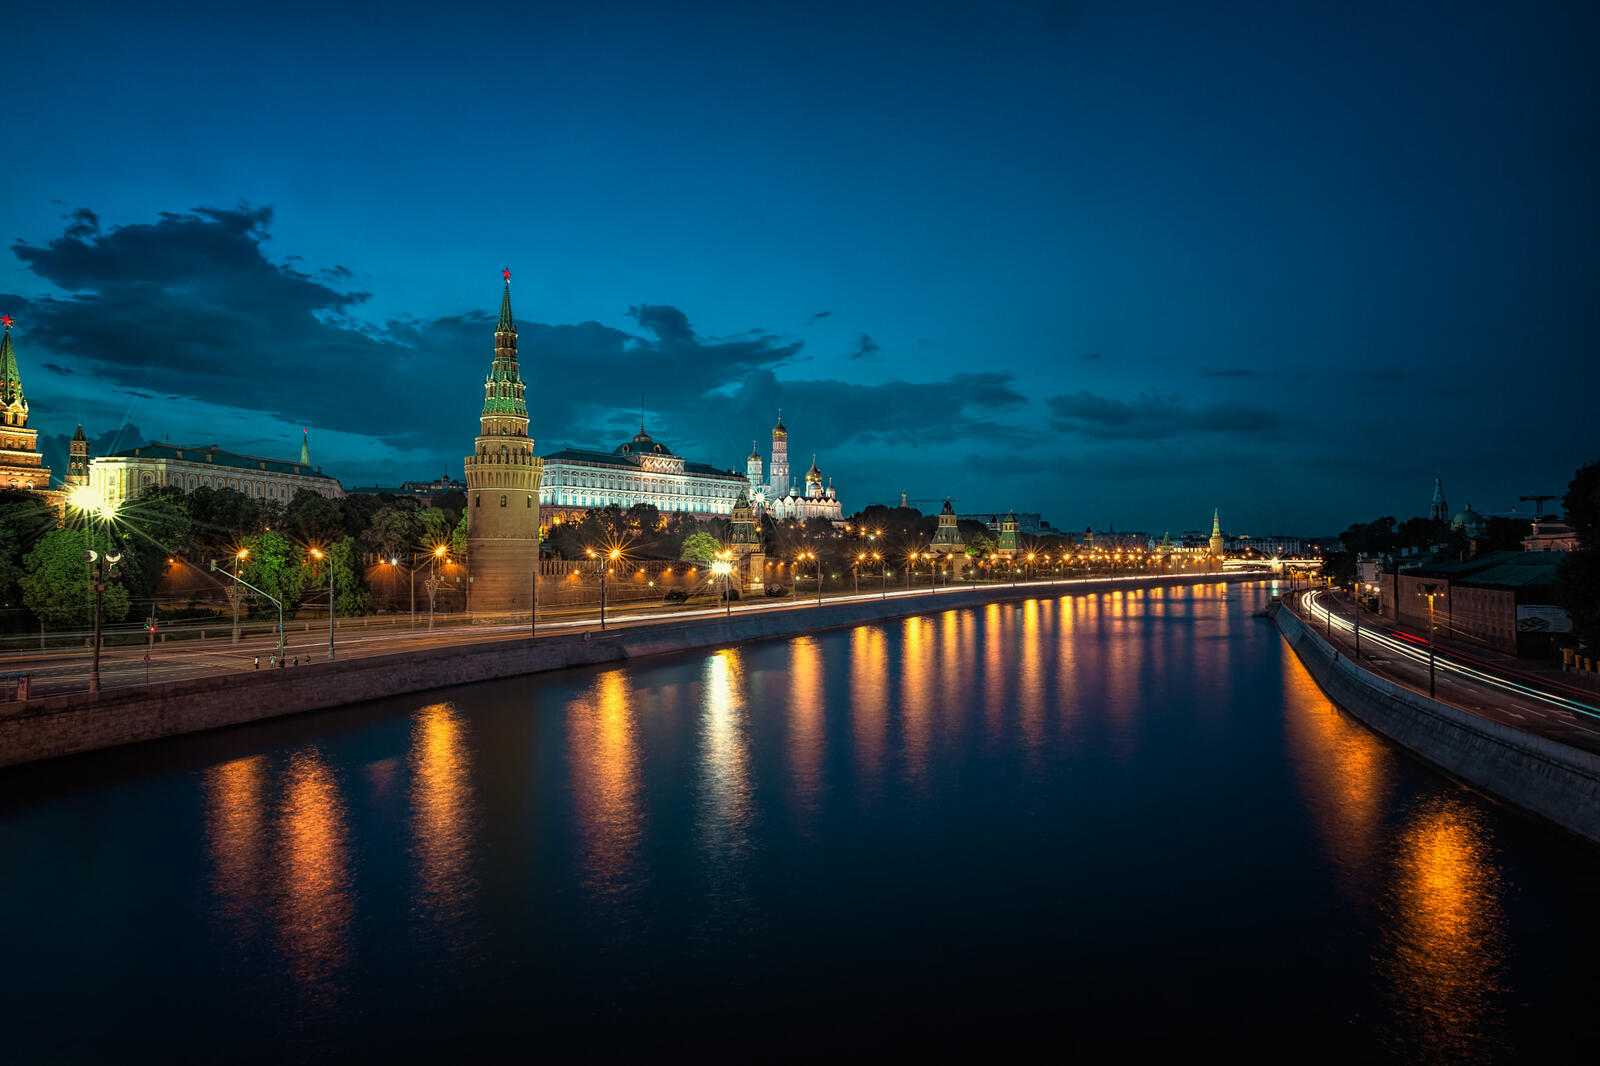 Обои Moscow Kremlin and Moscow River Illuminated in the Evening ночь освещение на рабочий стол